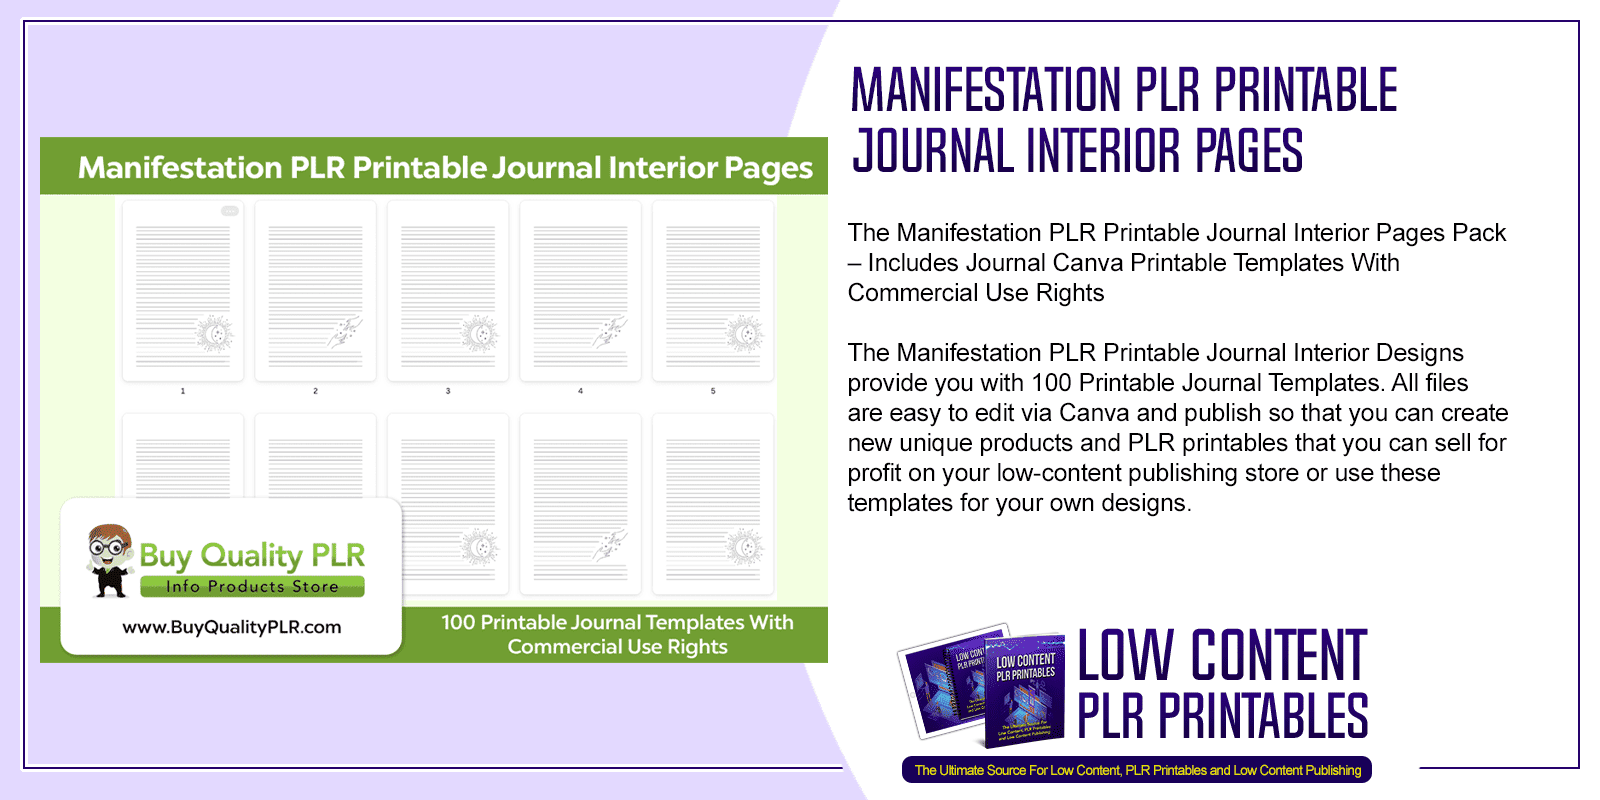 Manifestation PLR Printable Journal Interior Pages